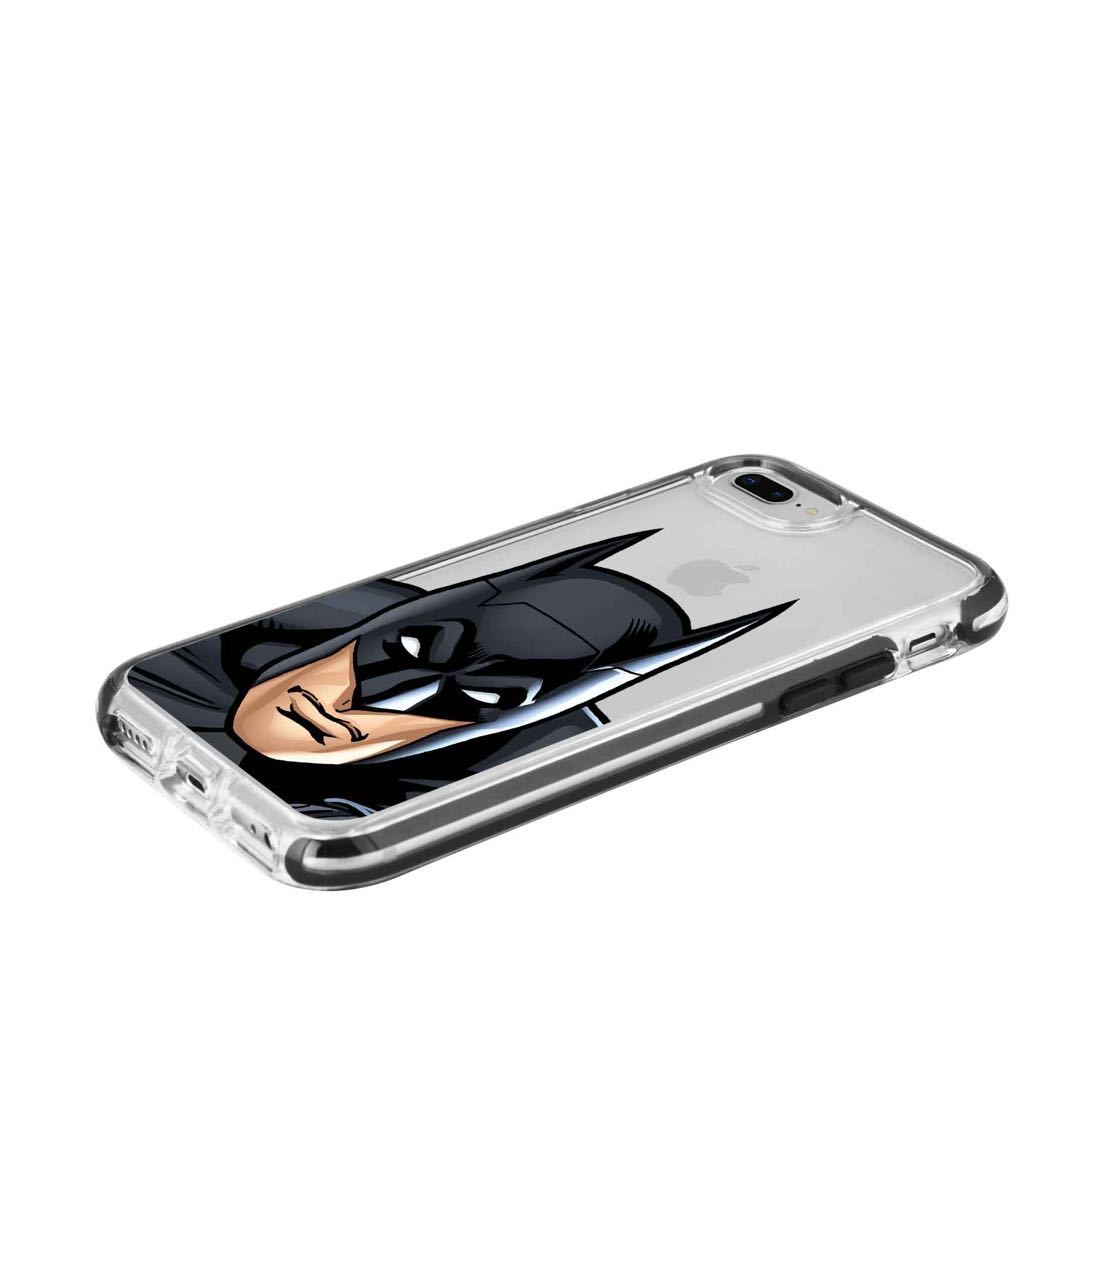 Fierce Batman - Extreme Phone Case for iPhone 8 Plus